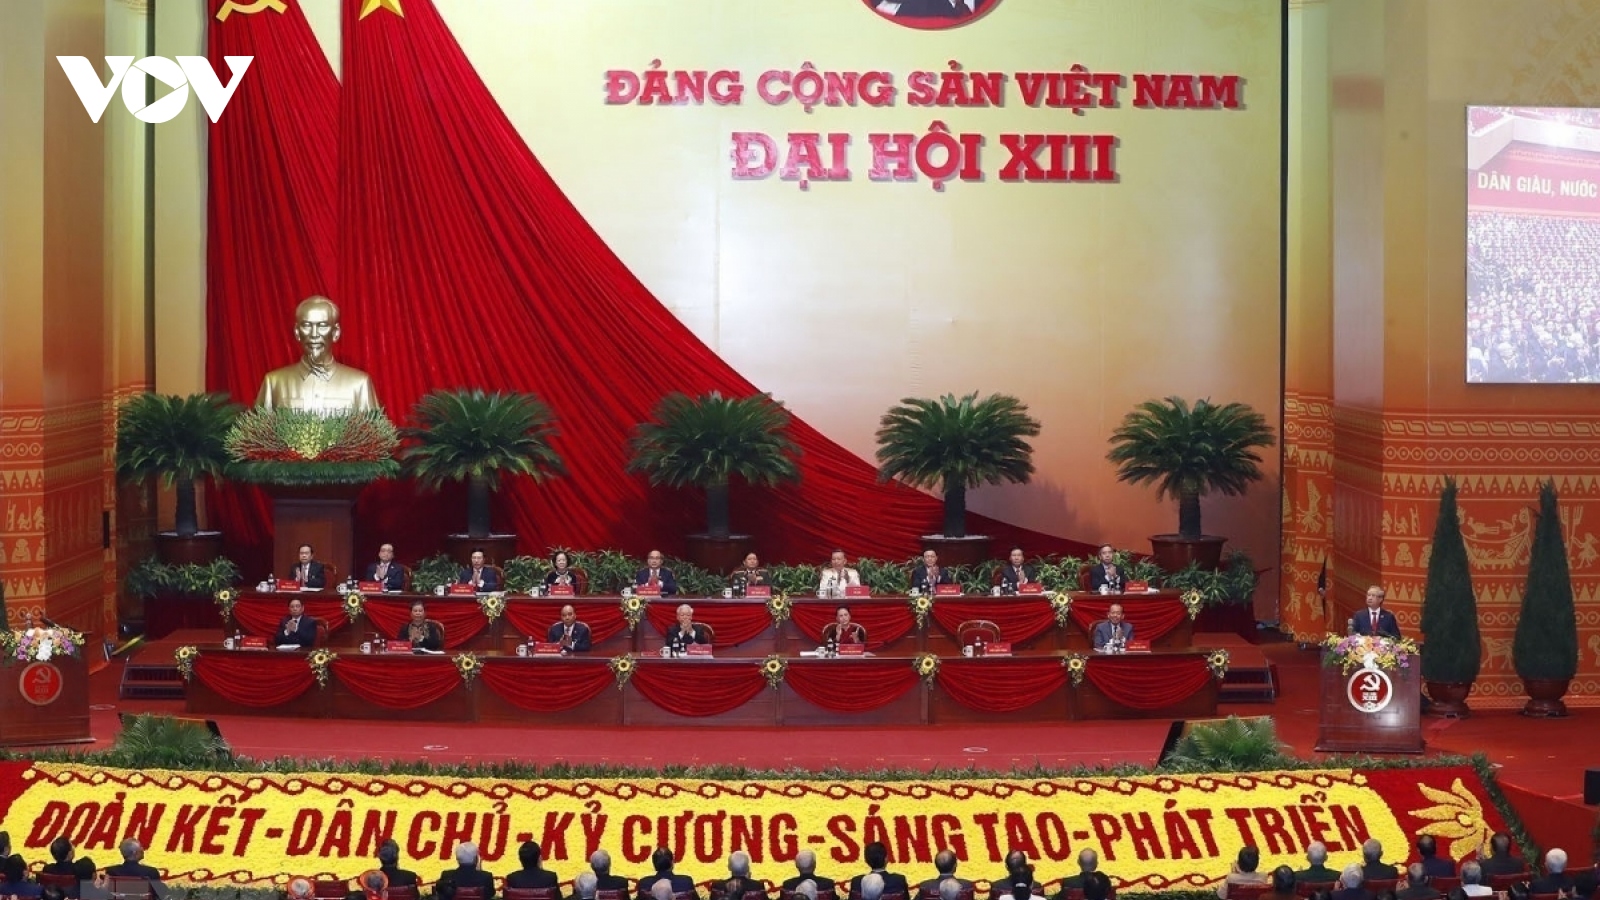 Activists in US believe in future Vietnamese development following Party Congress